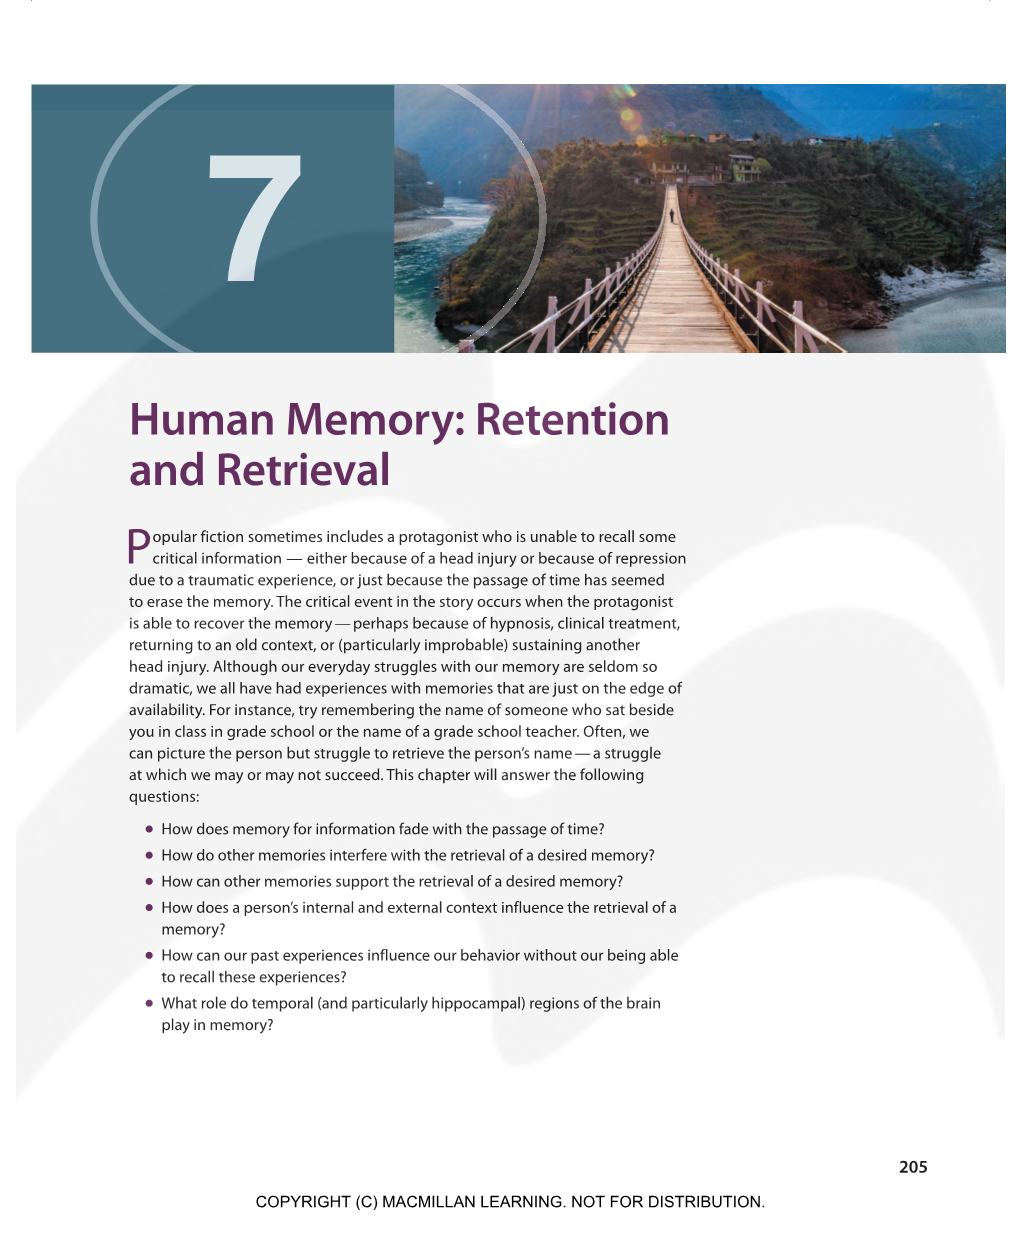 Human Memory: Retention and Retrieval